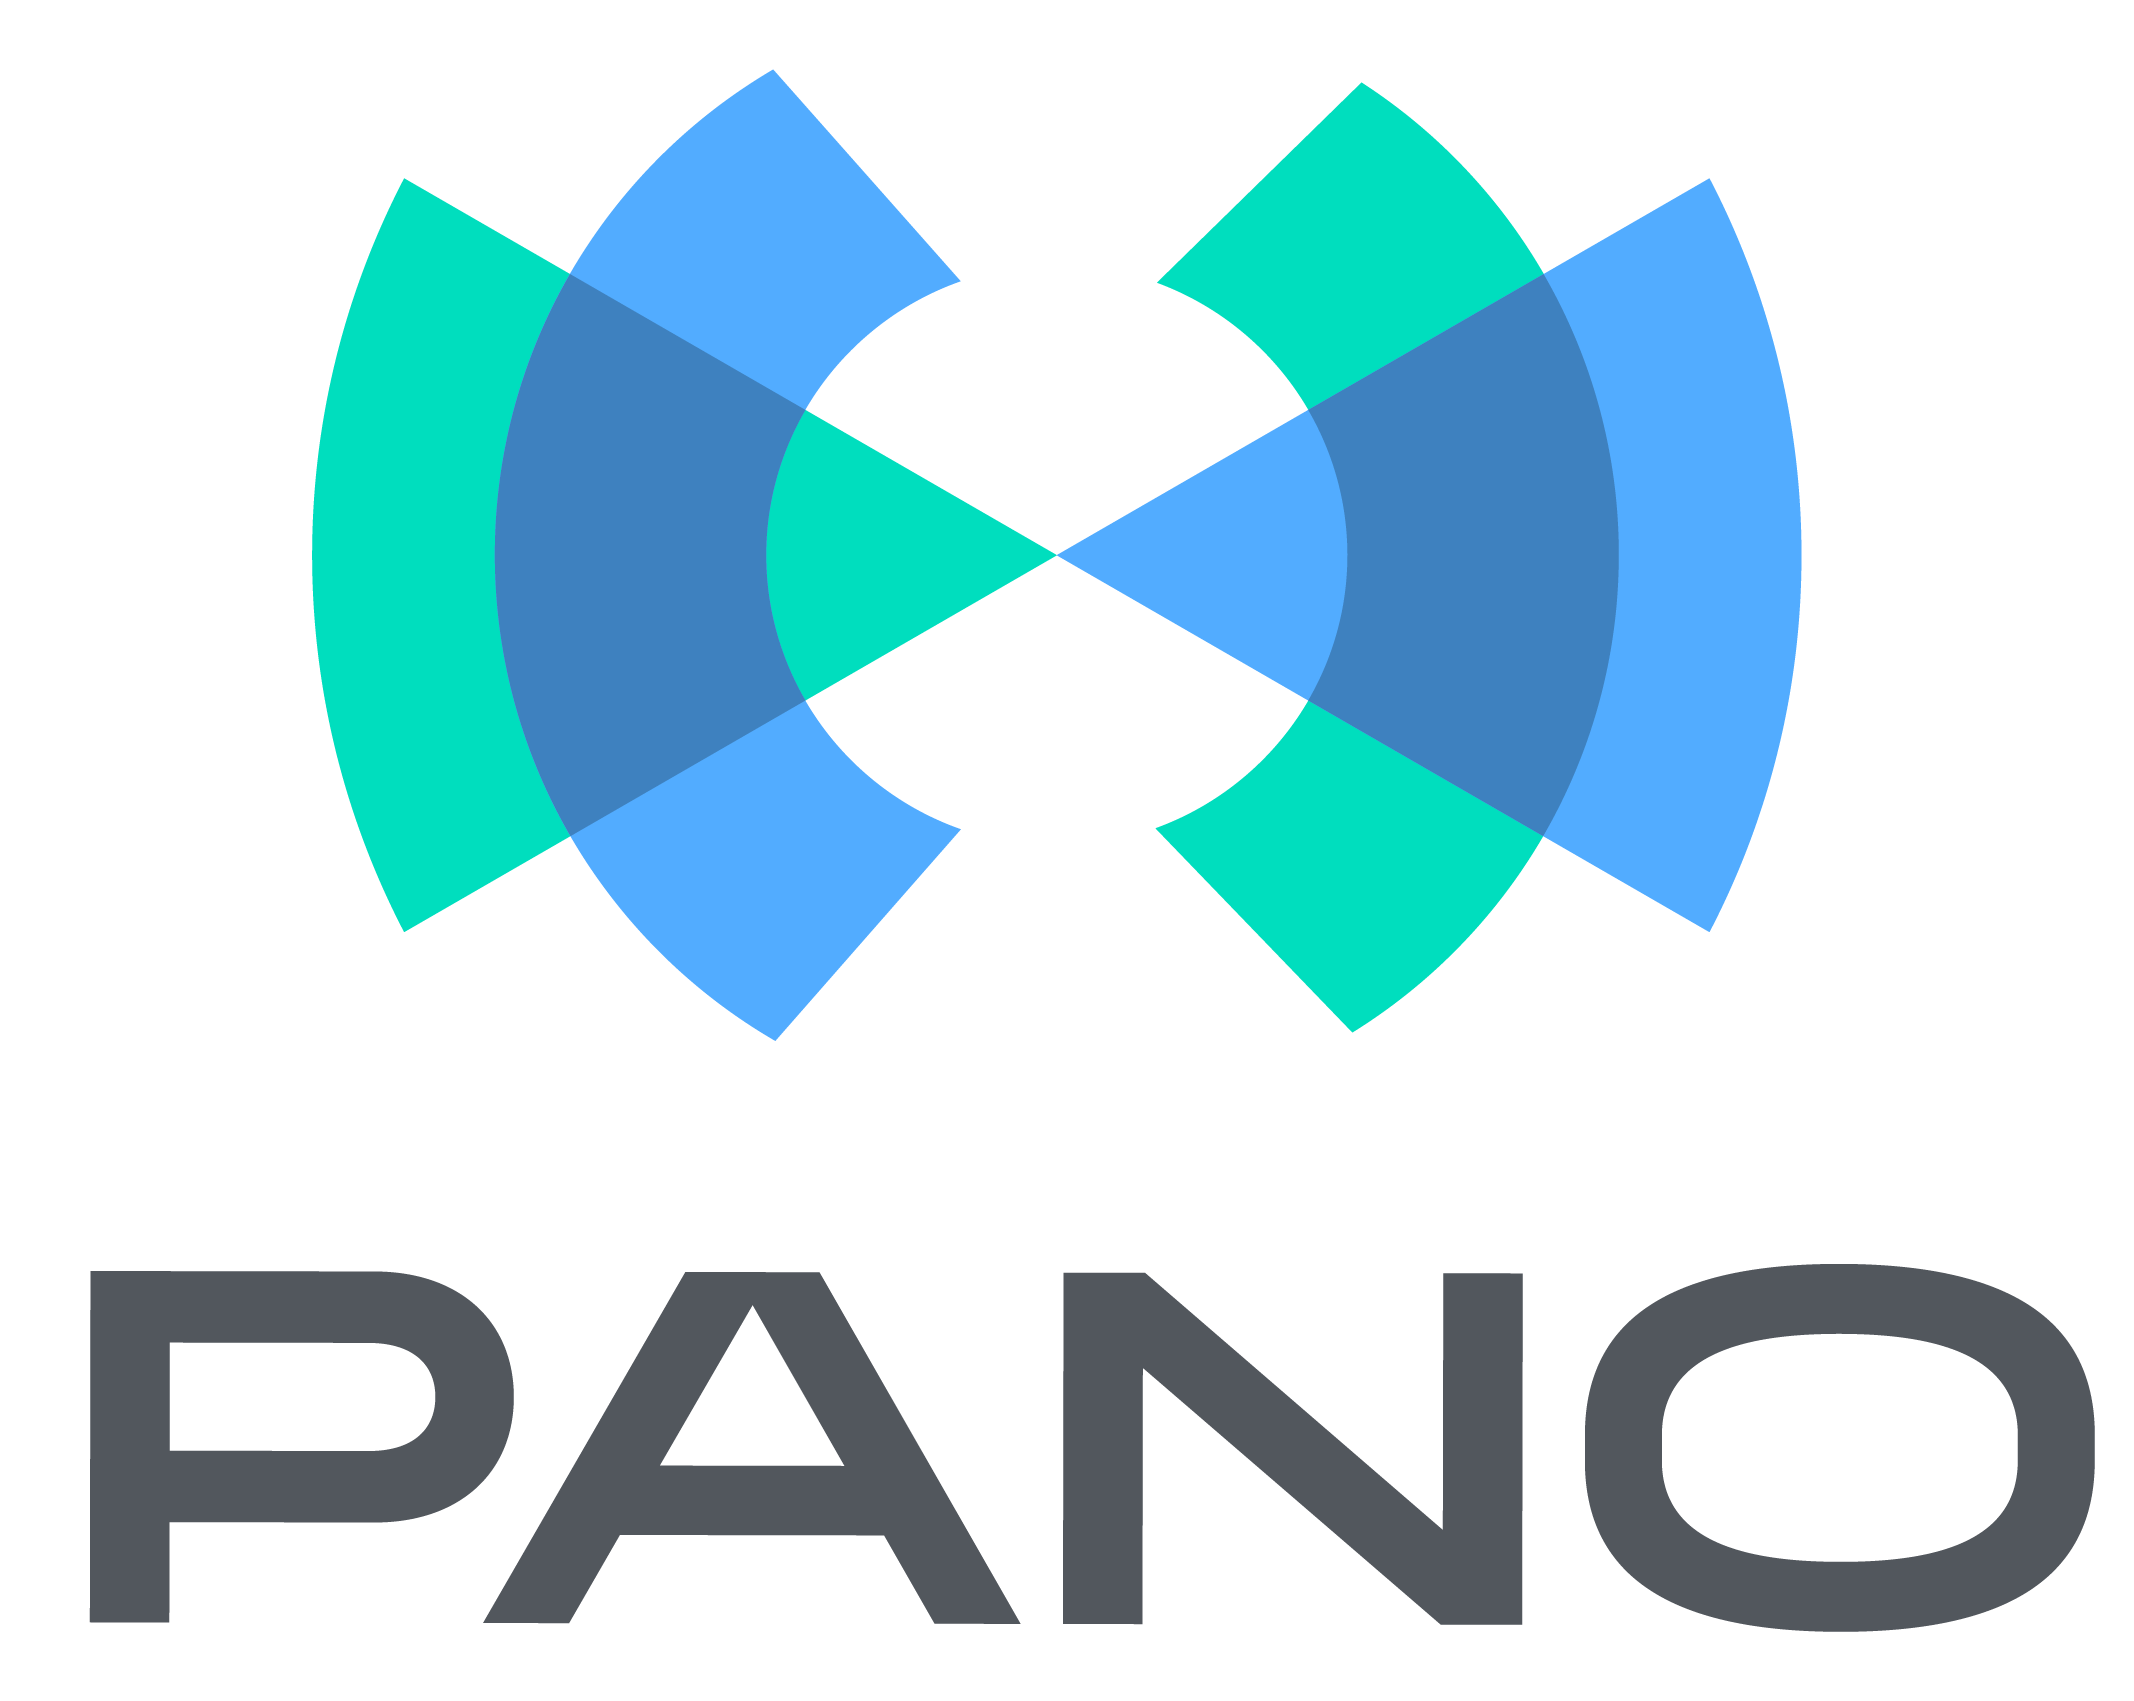 The full color Pano Marketing logo